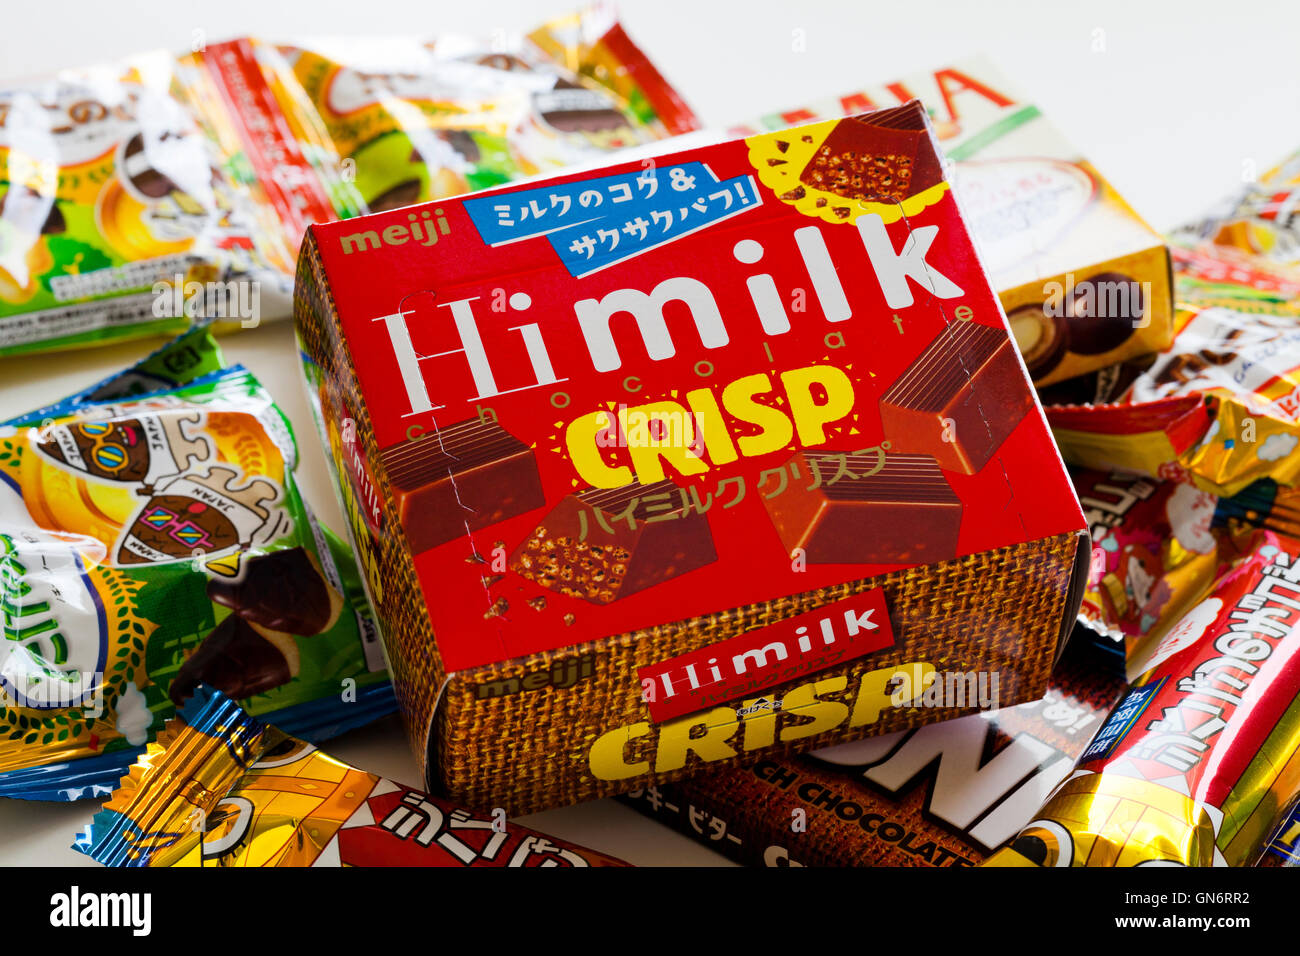 Himilk Cristp giapponese dolci al cioccolato Foto Stock